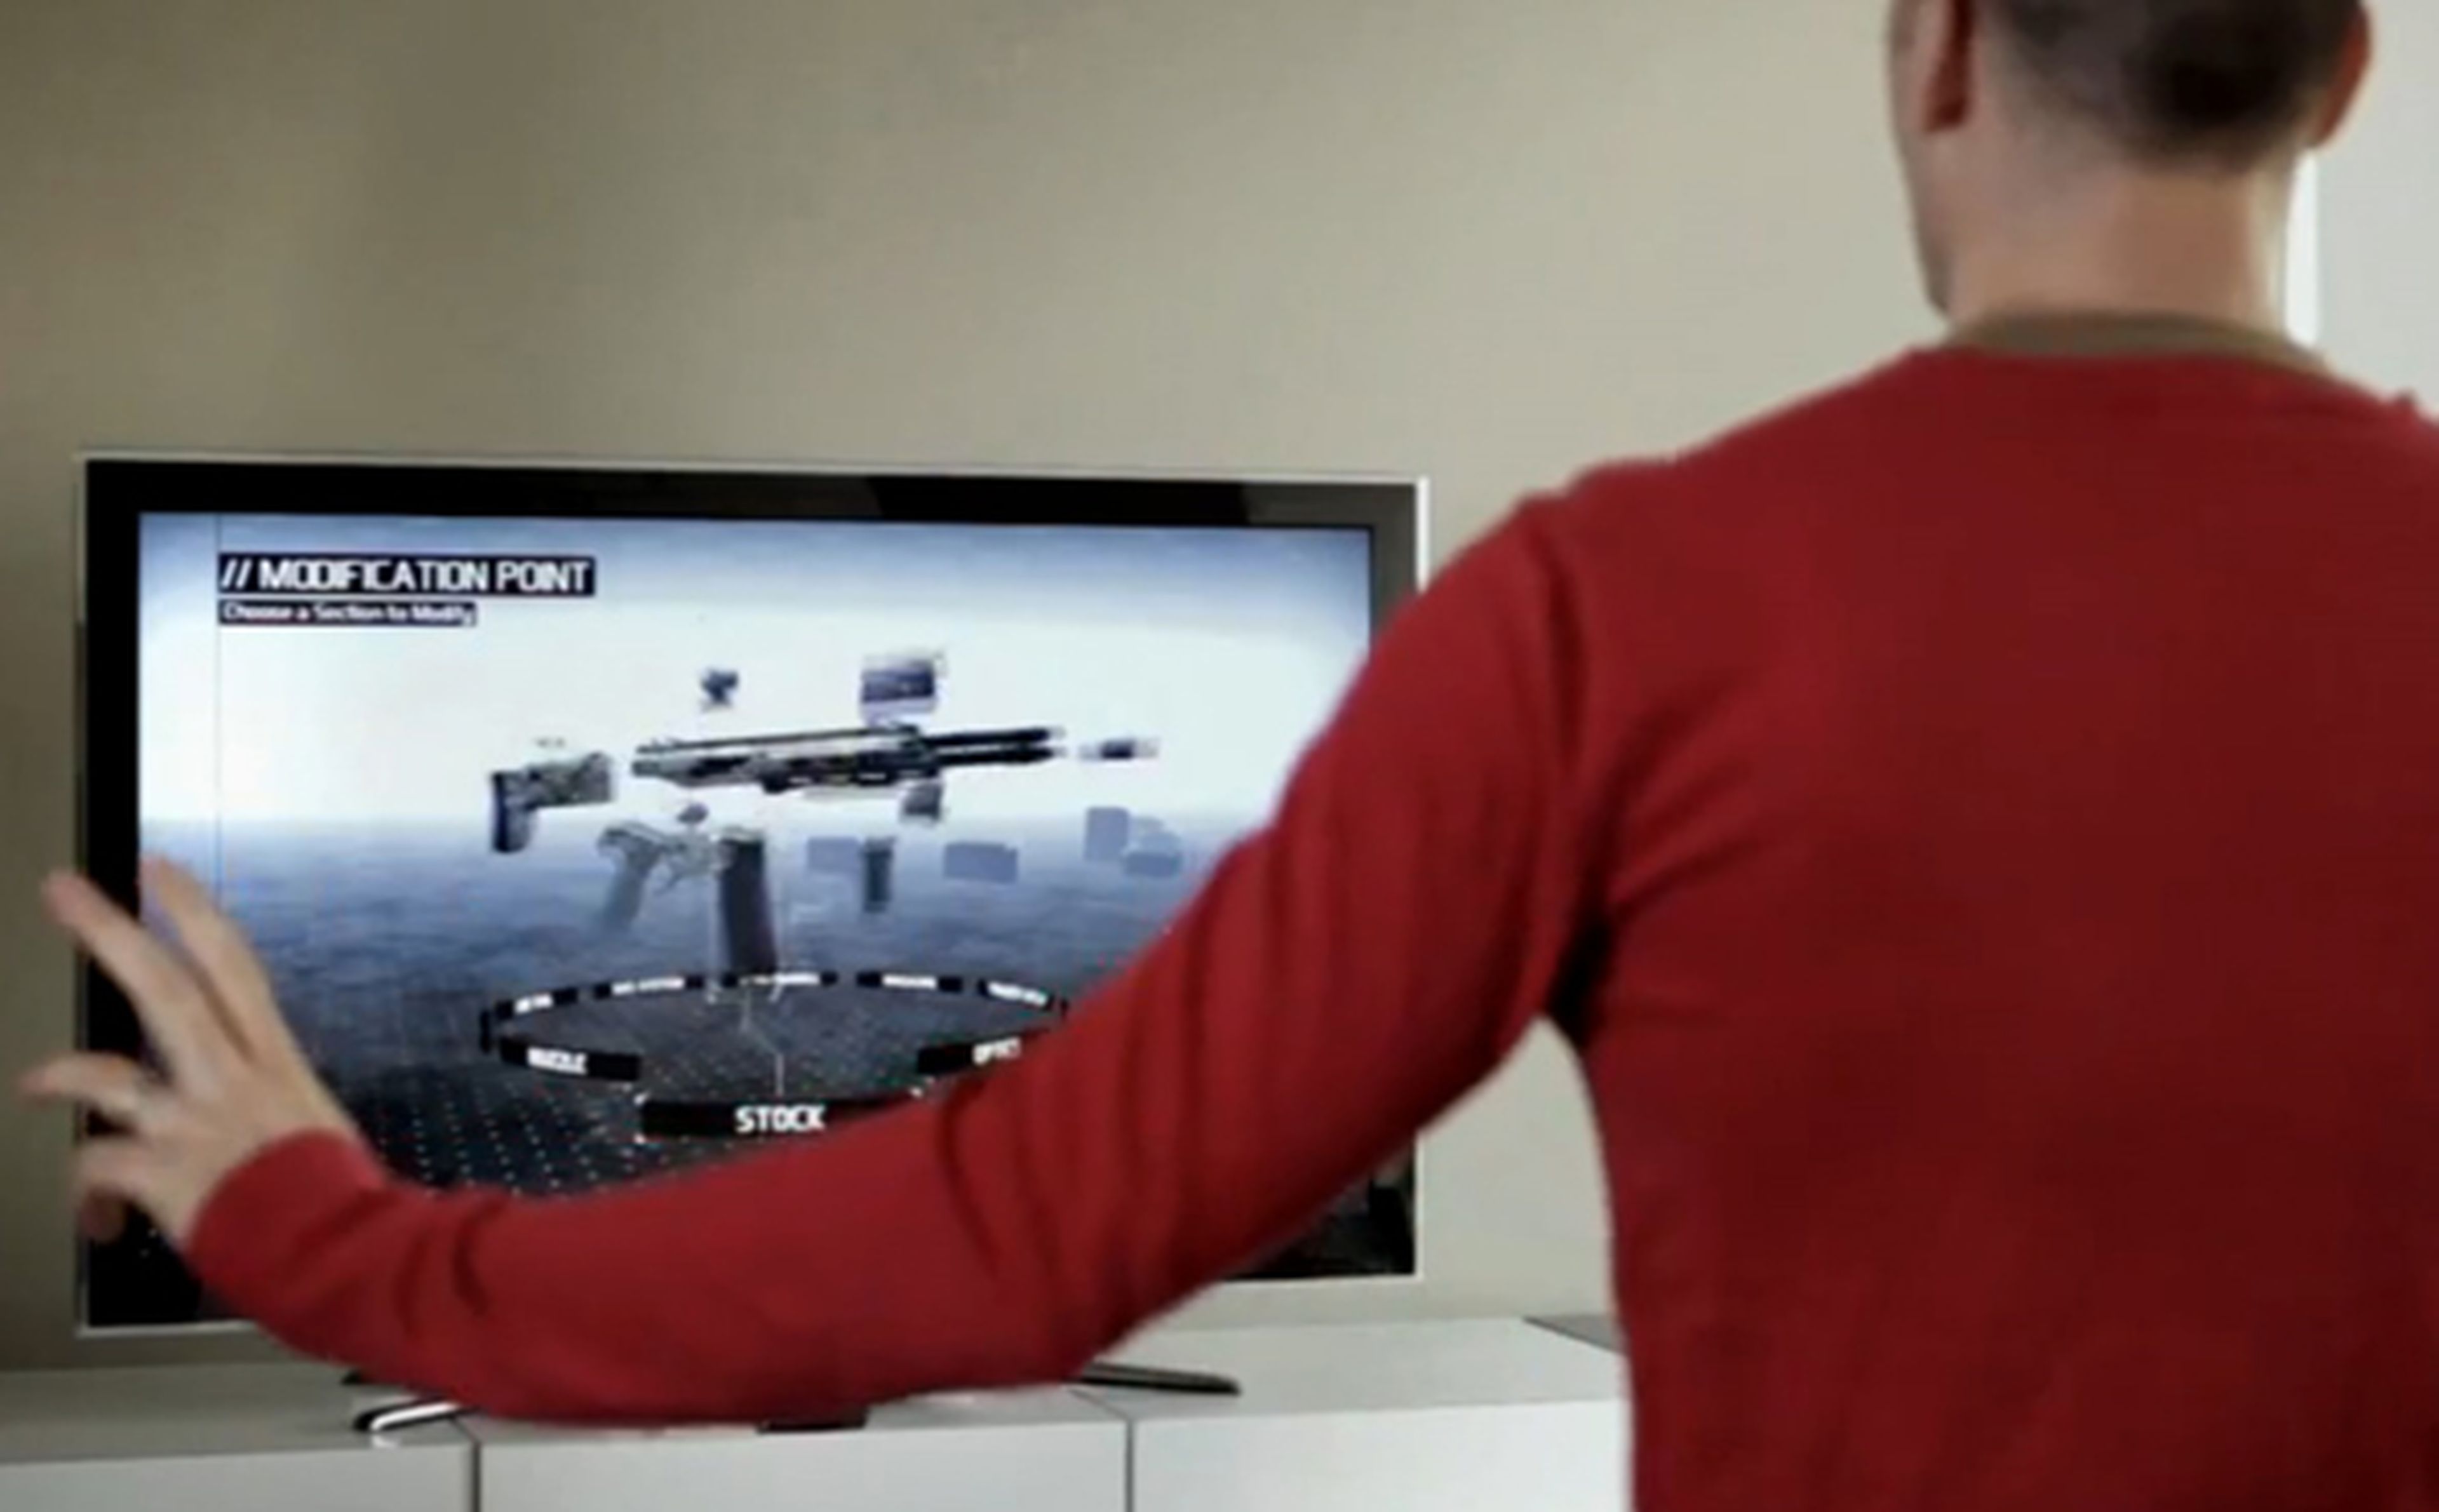 Microsoft 'no fuerza' a usar Kinect